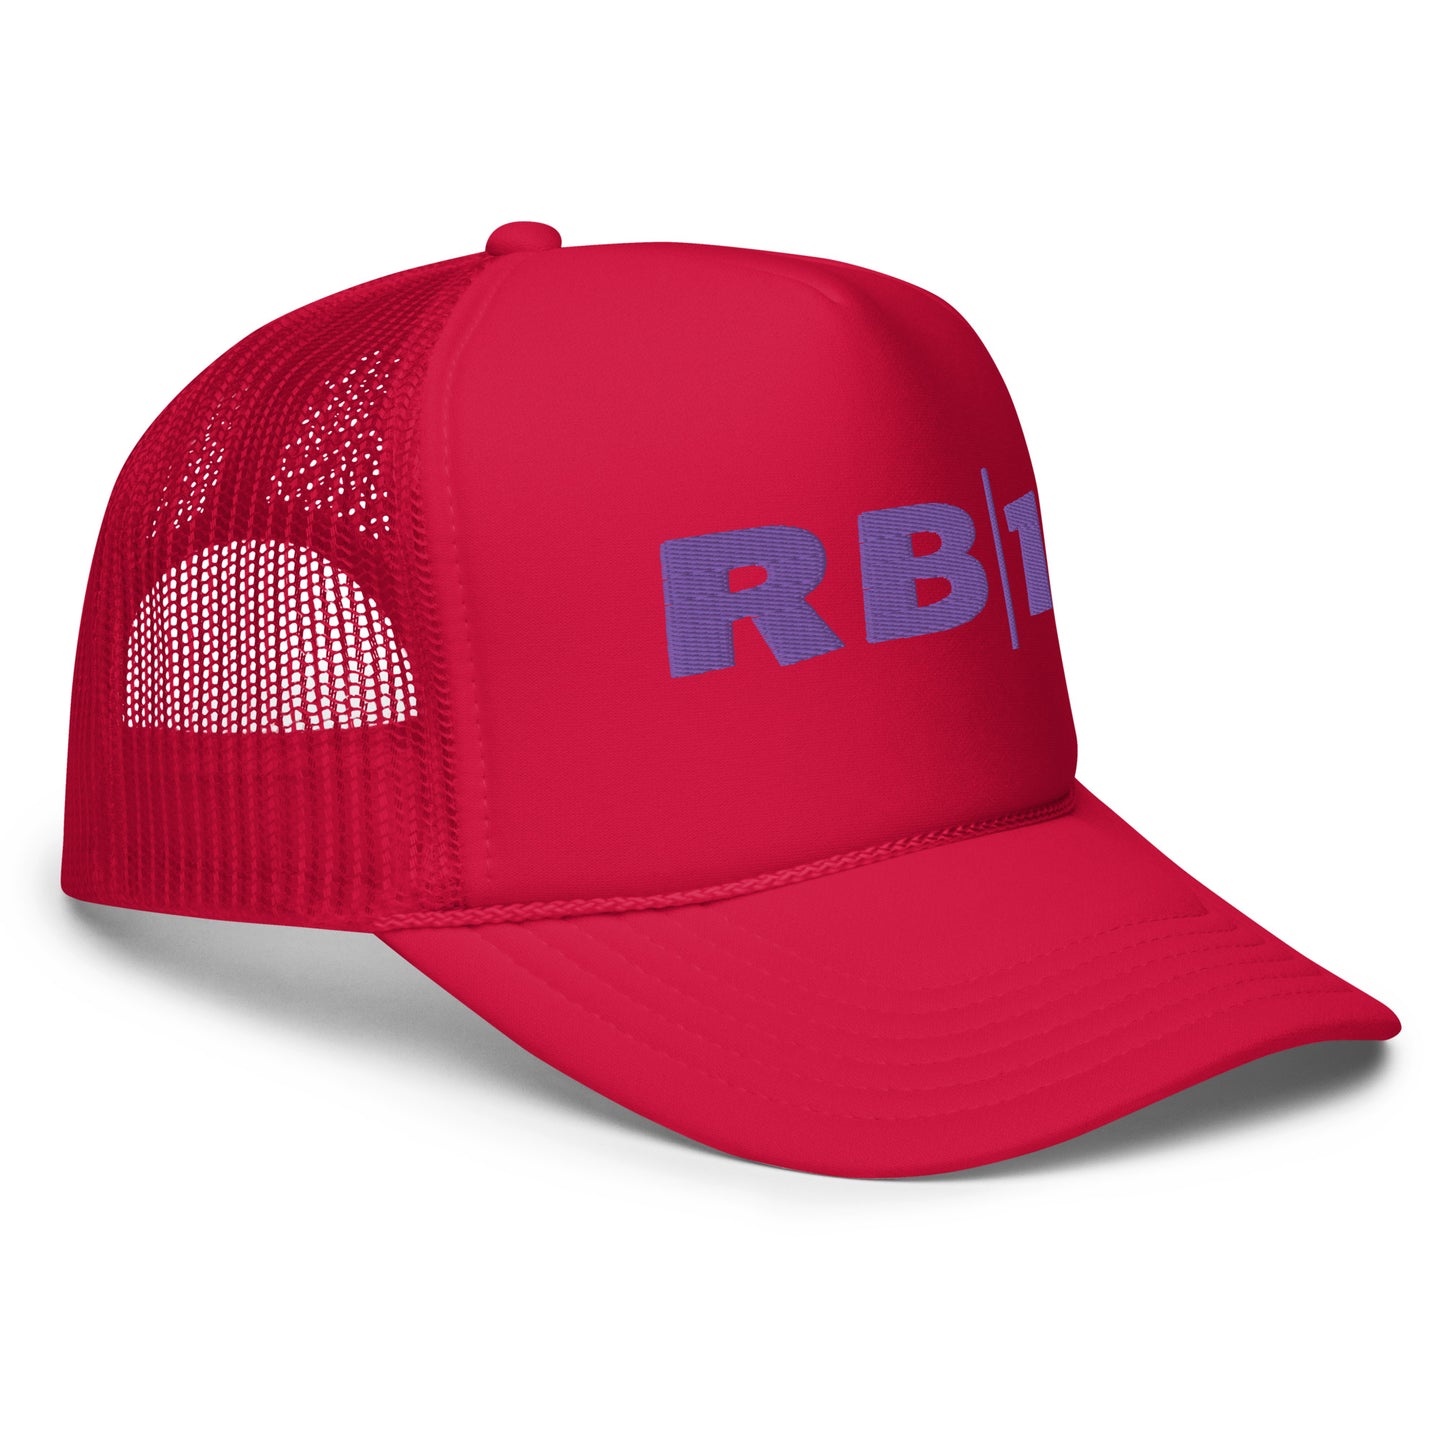 RBA - "RB|1" Hat Purple Logo